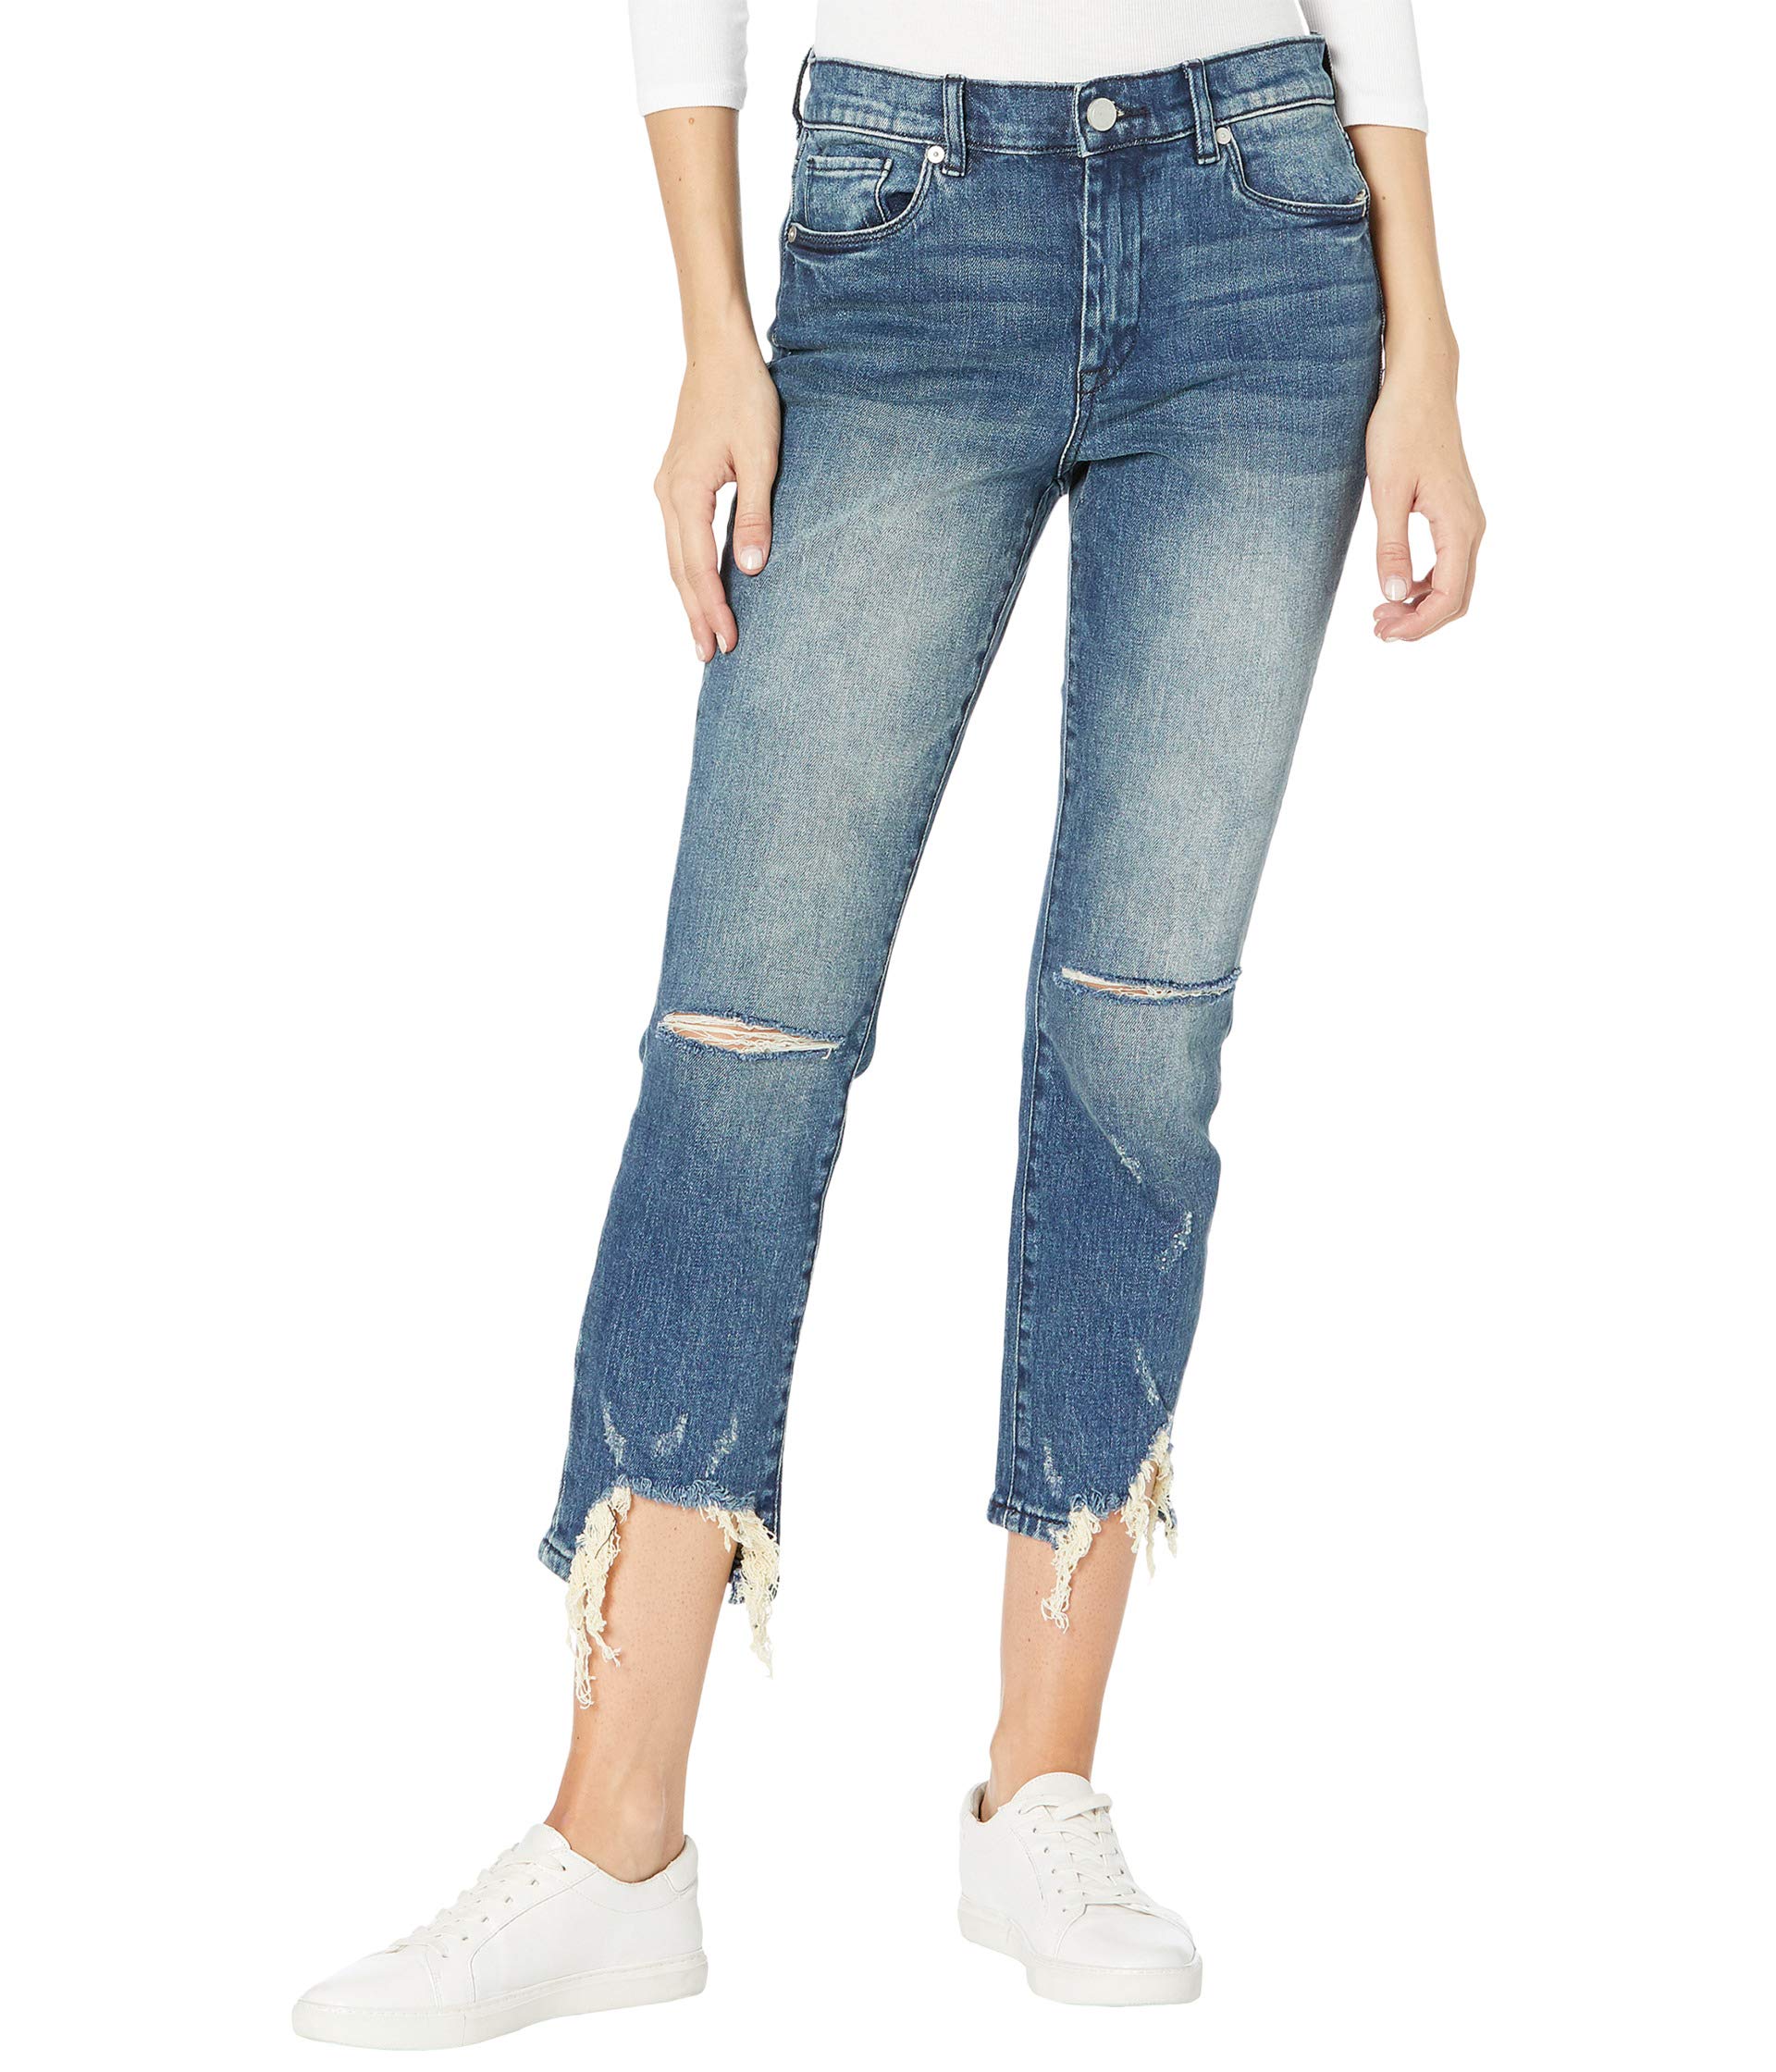 Джинсы Blank NYC, Madison High-Rise Crop Medium Wash Skinny Jeans w/ Raw Hem Detail in My Type